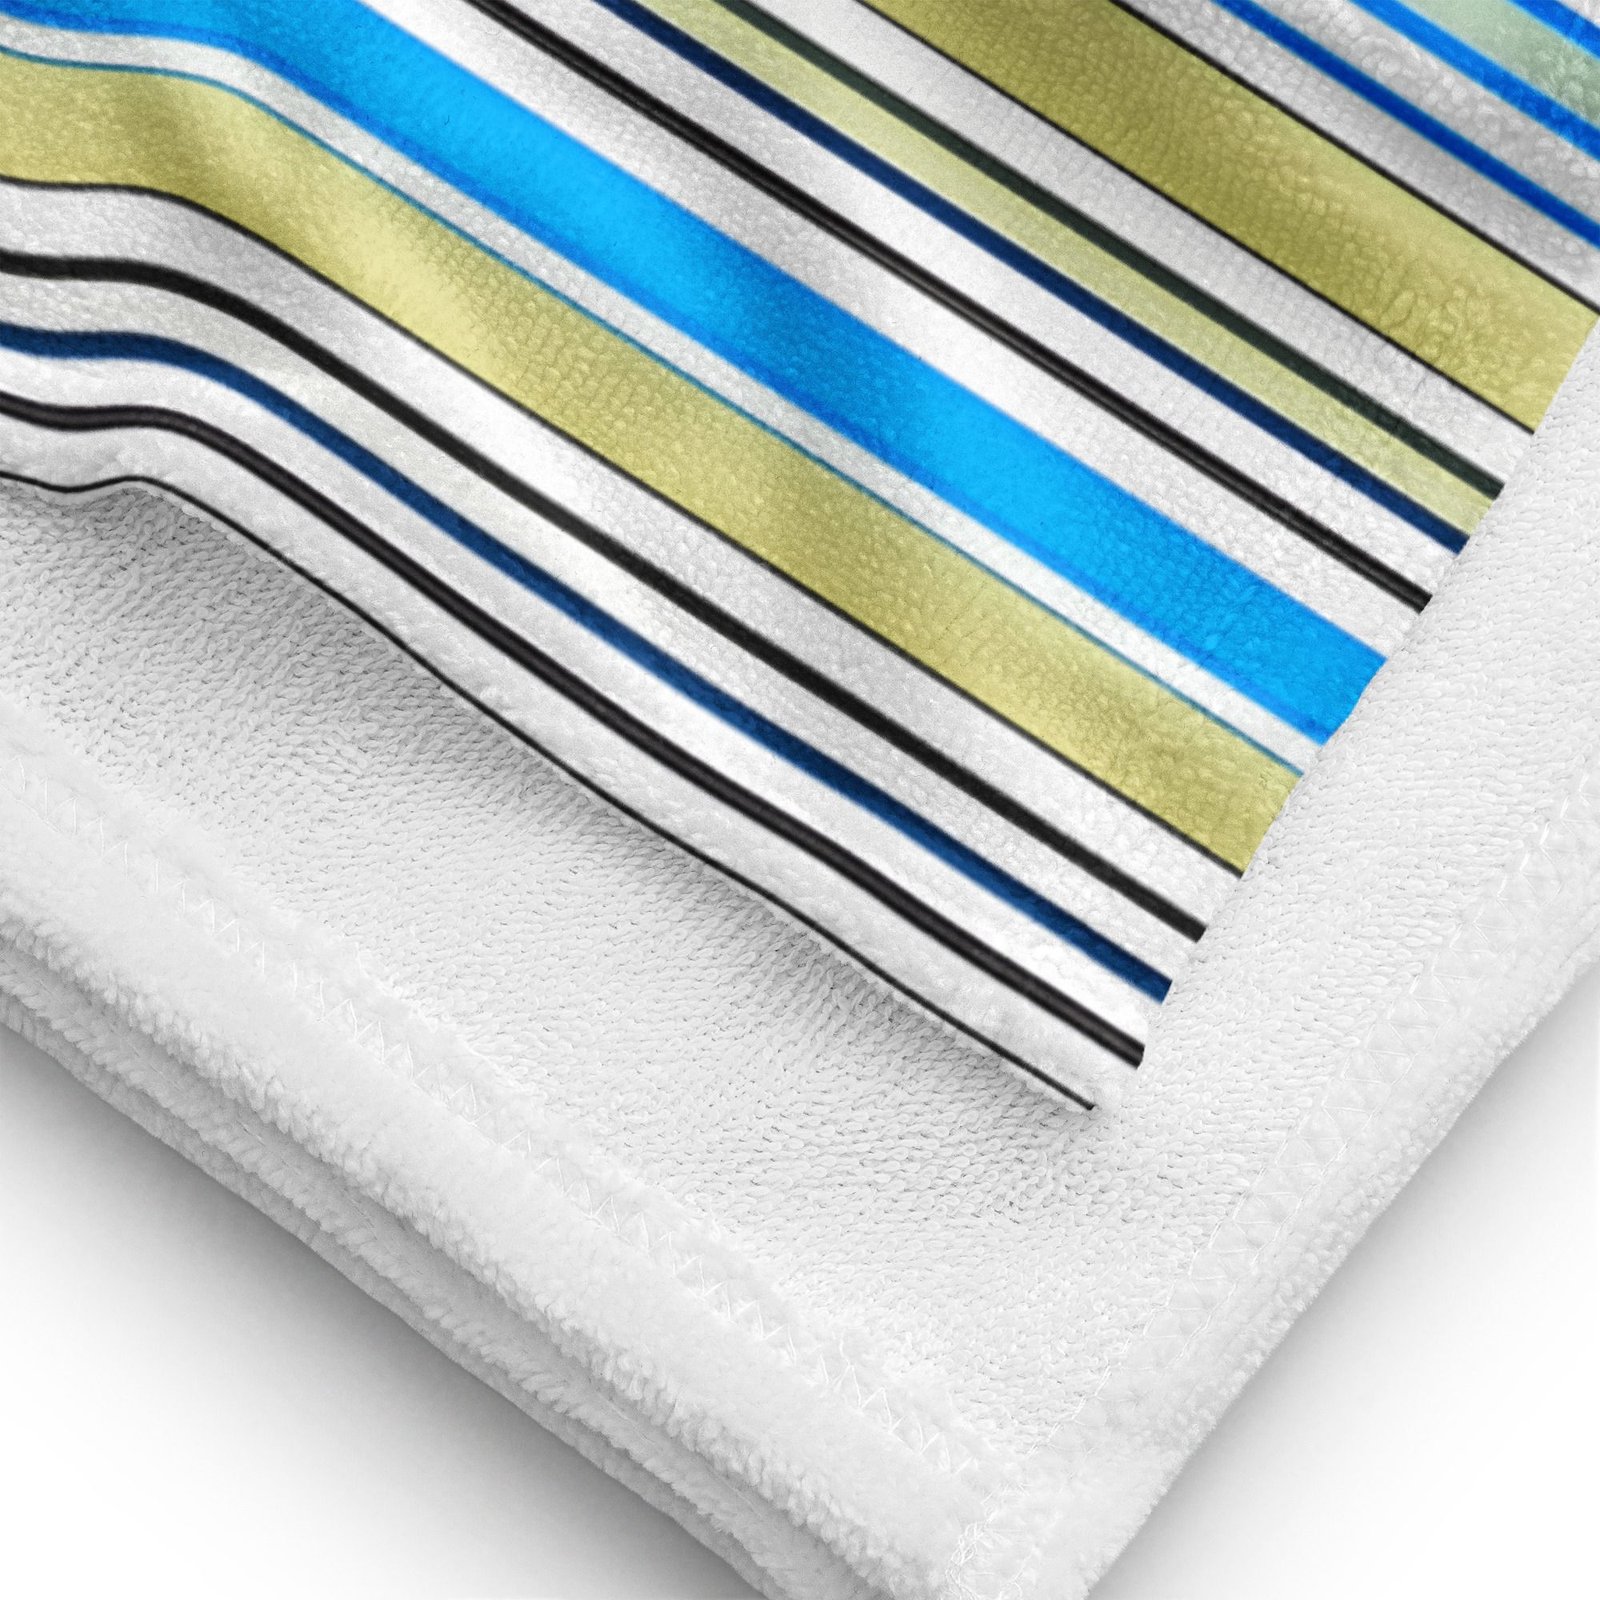 sublimated towel white 30x60 product details 64bd13b289f7c